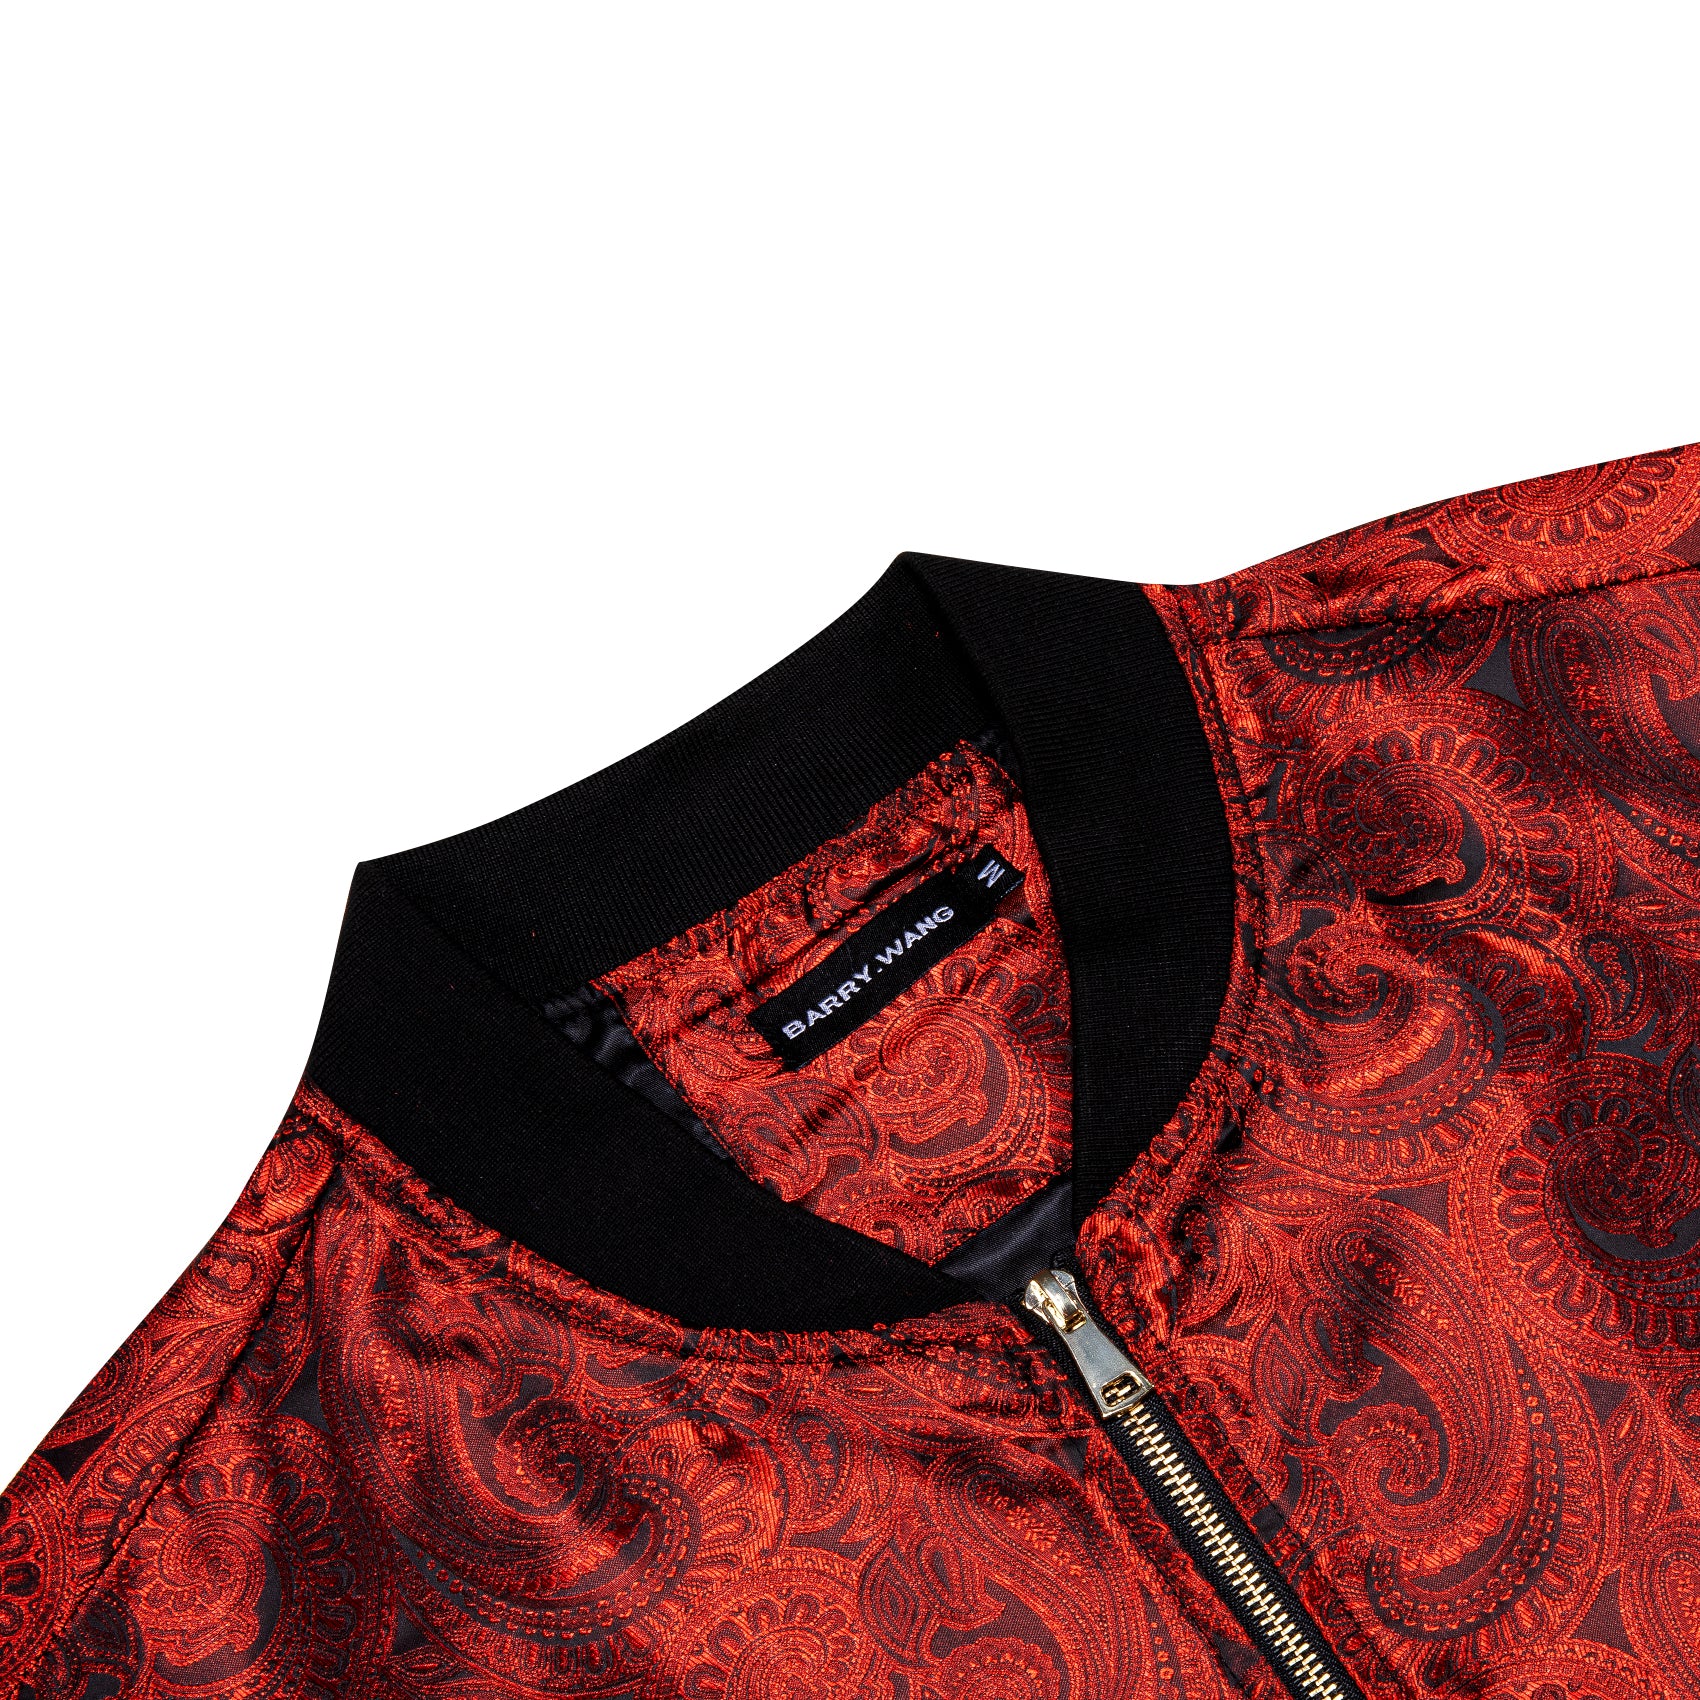 Mens Red Floral Jacquard Paisley Jacket